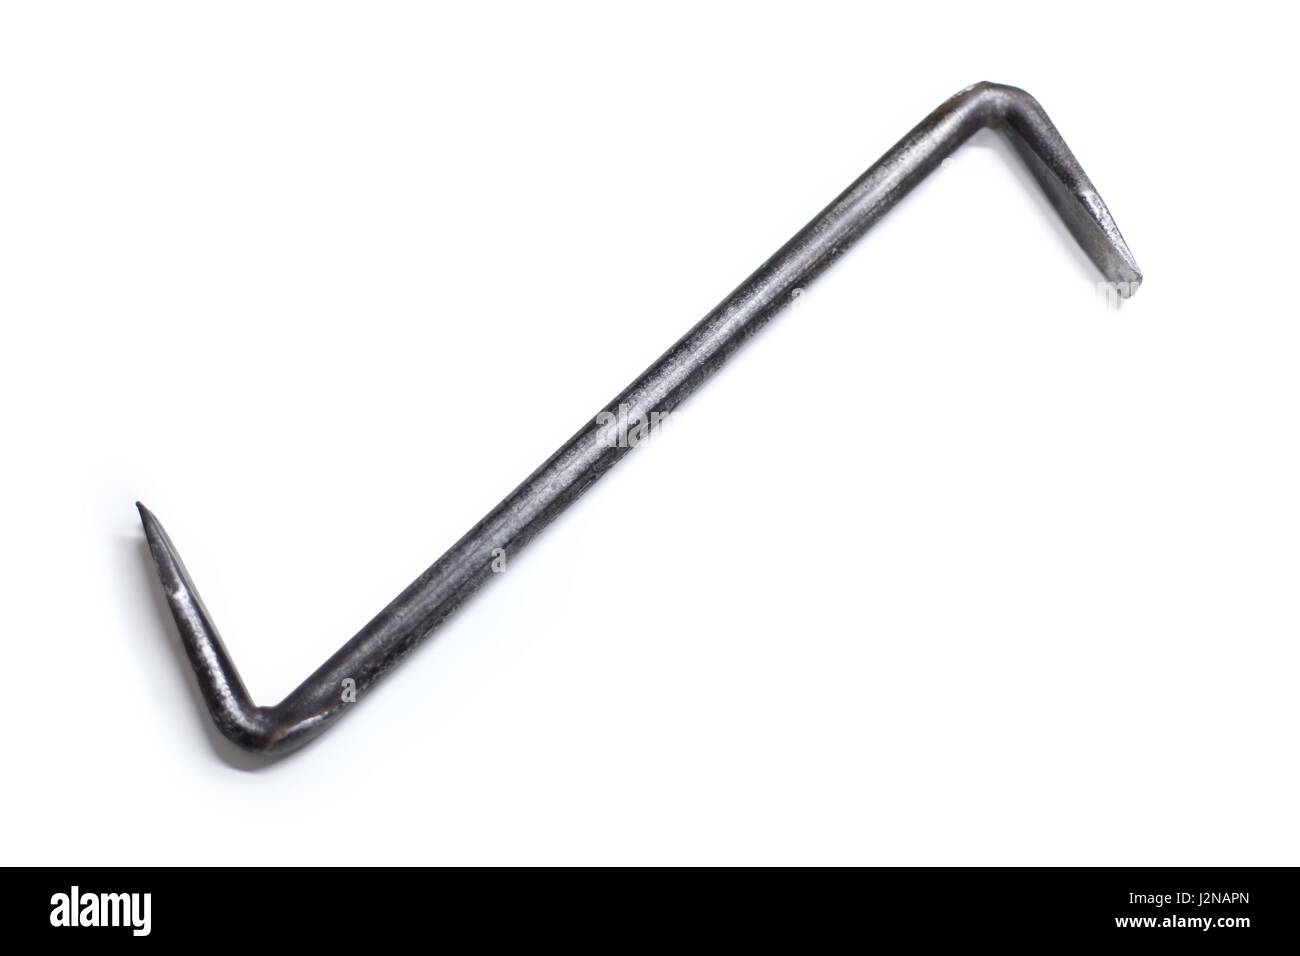 Crowbar prybar, wrecking bar tool Stock Photo